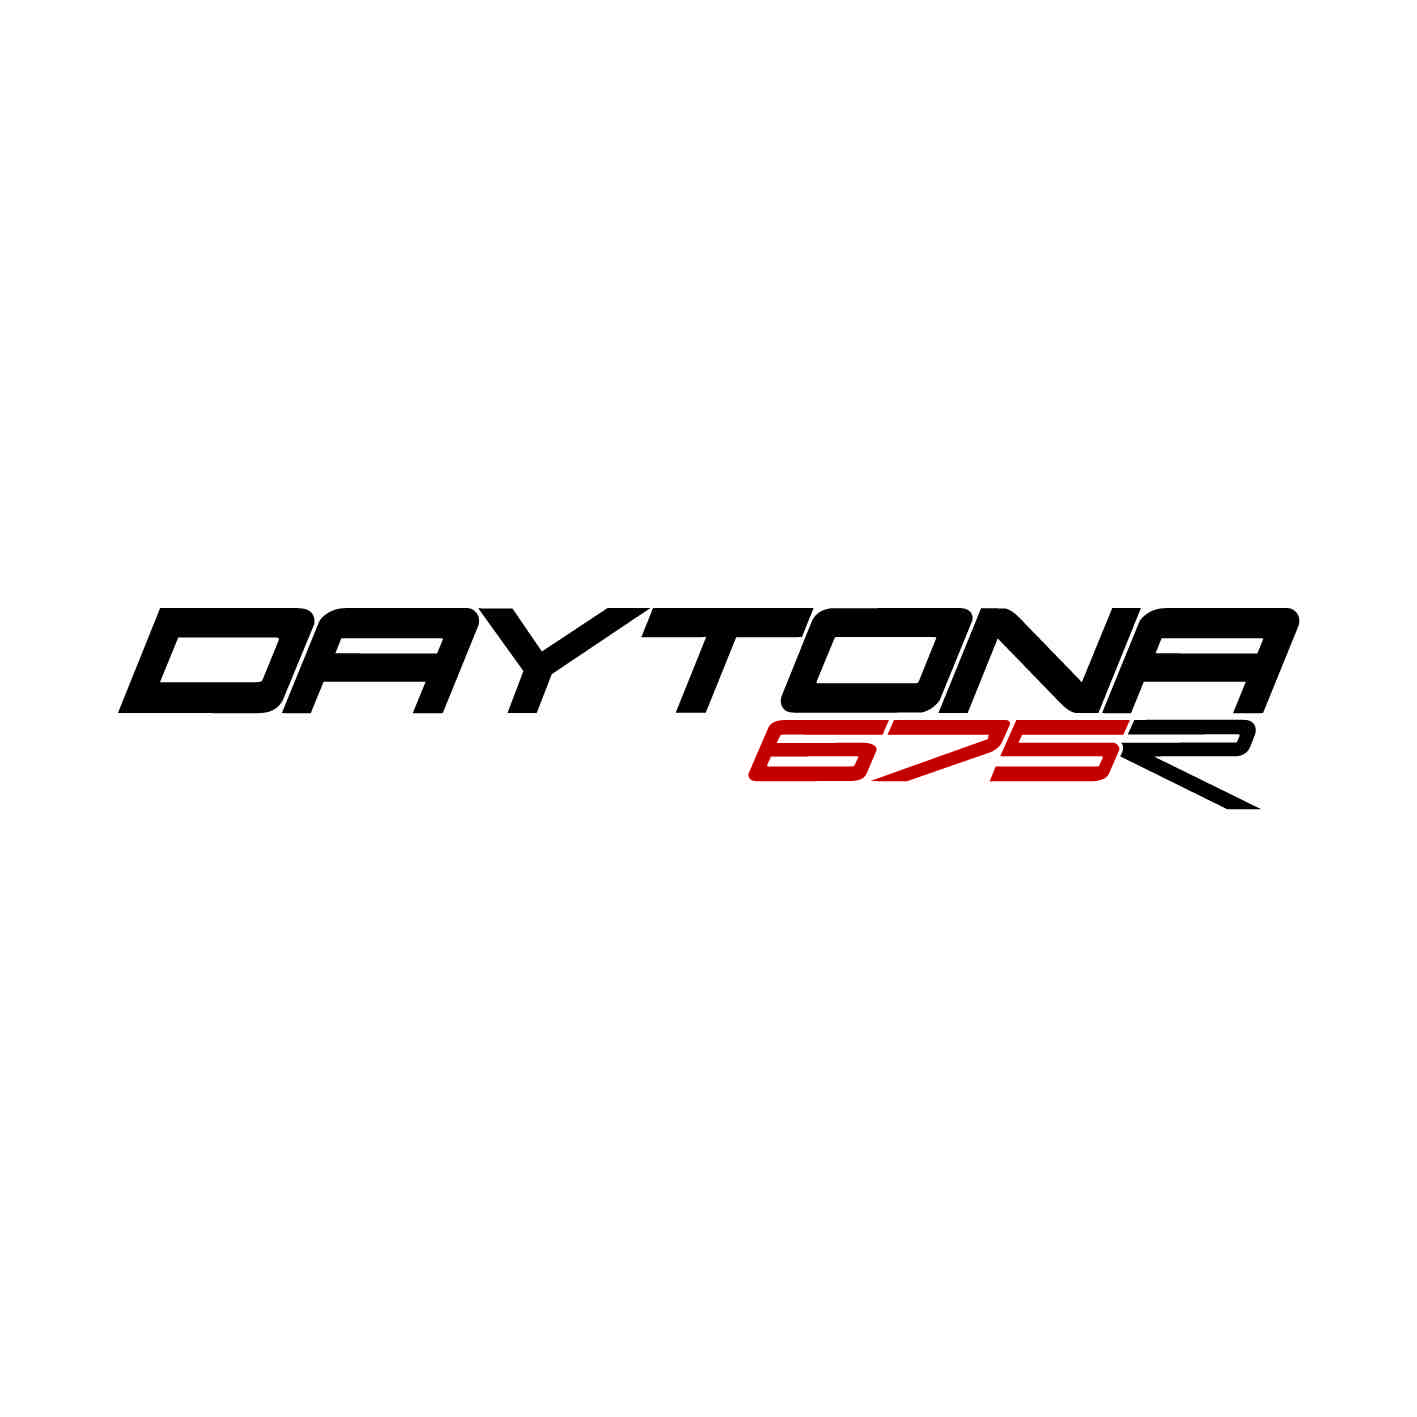 Daytona 675 Logo - Autocollant Triumph Daytona 675R - Stickers moto